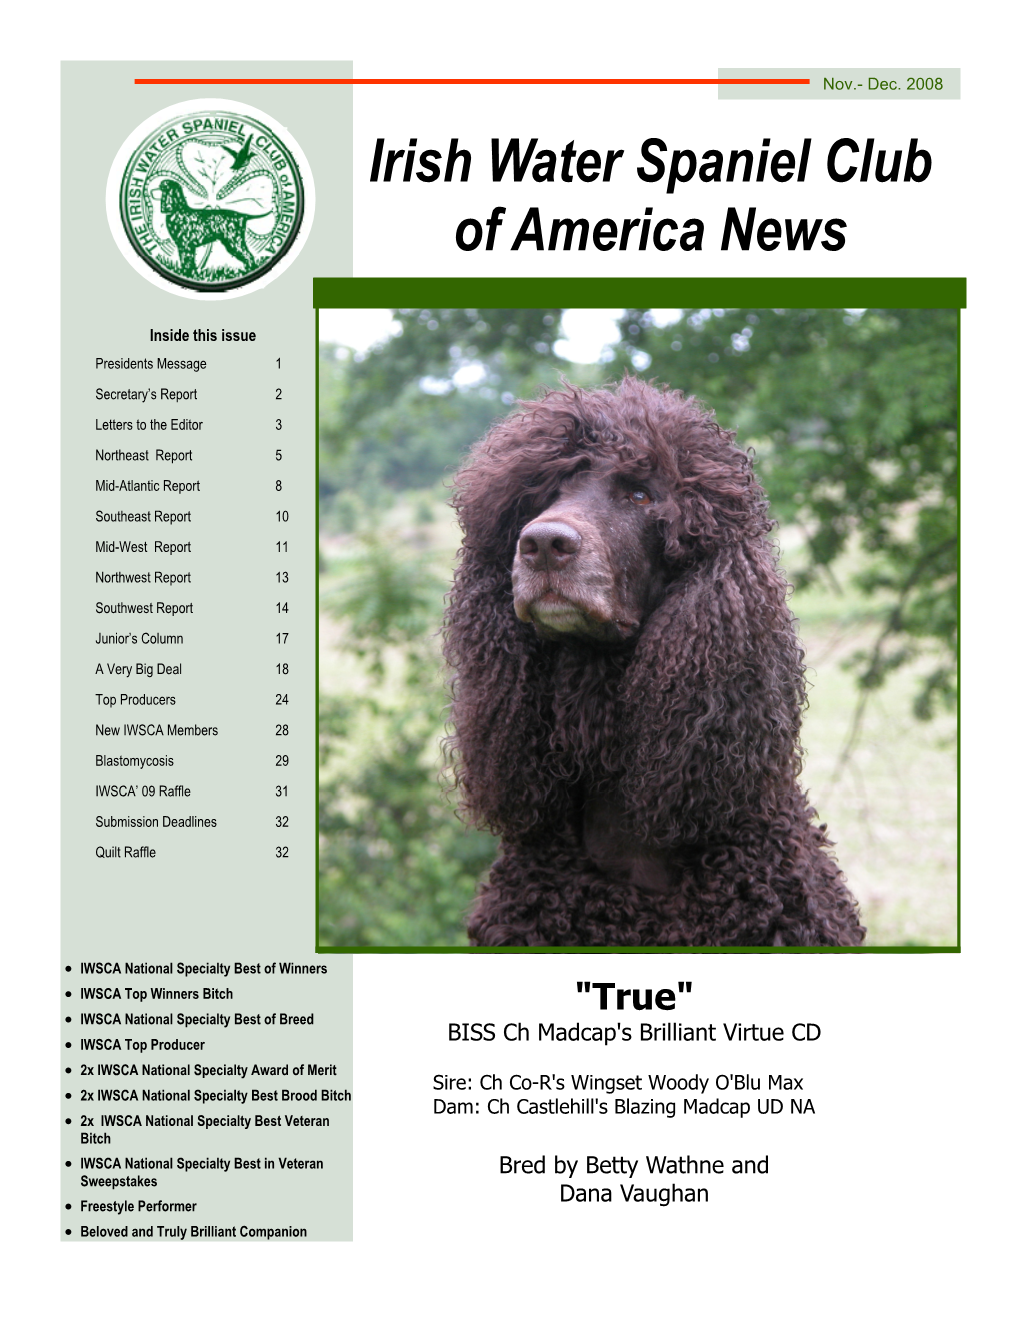 Irish Water Spaniel Club of America News